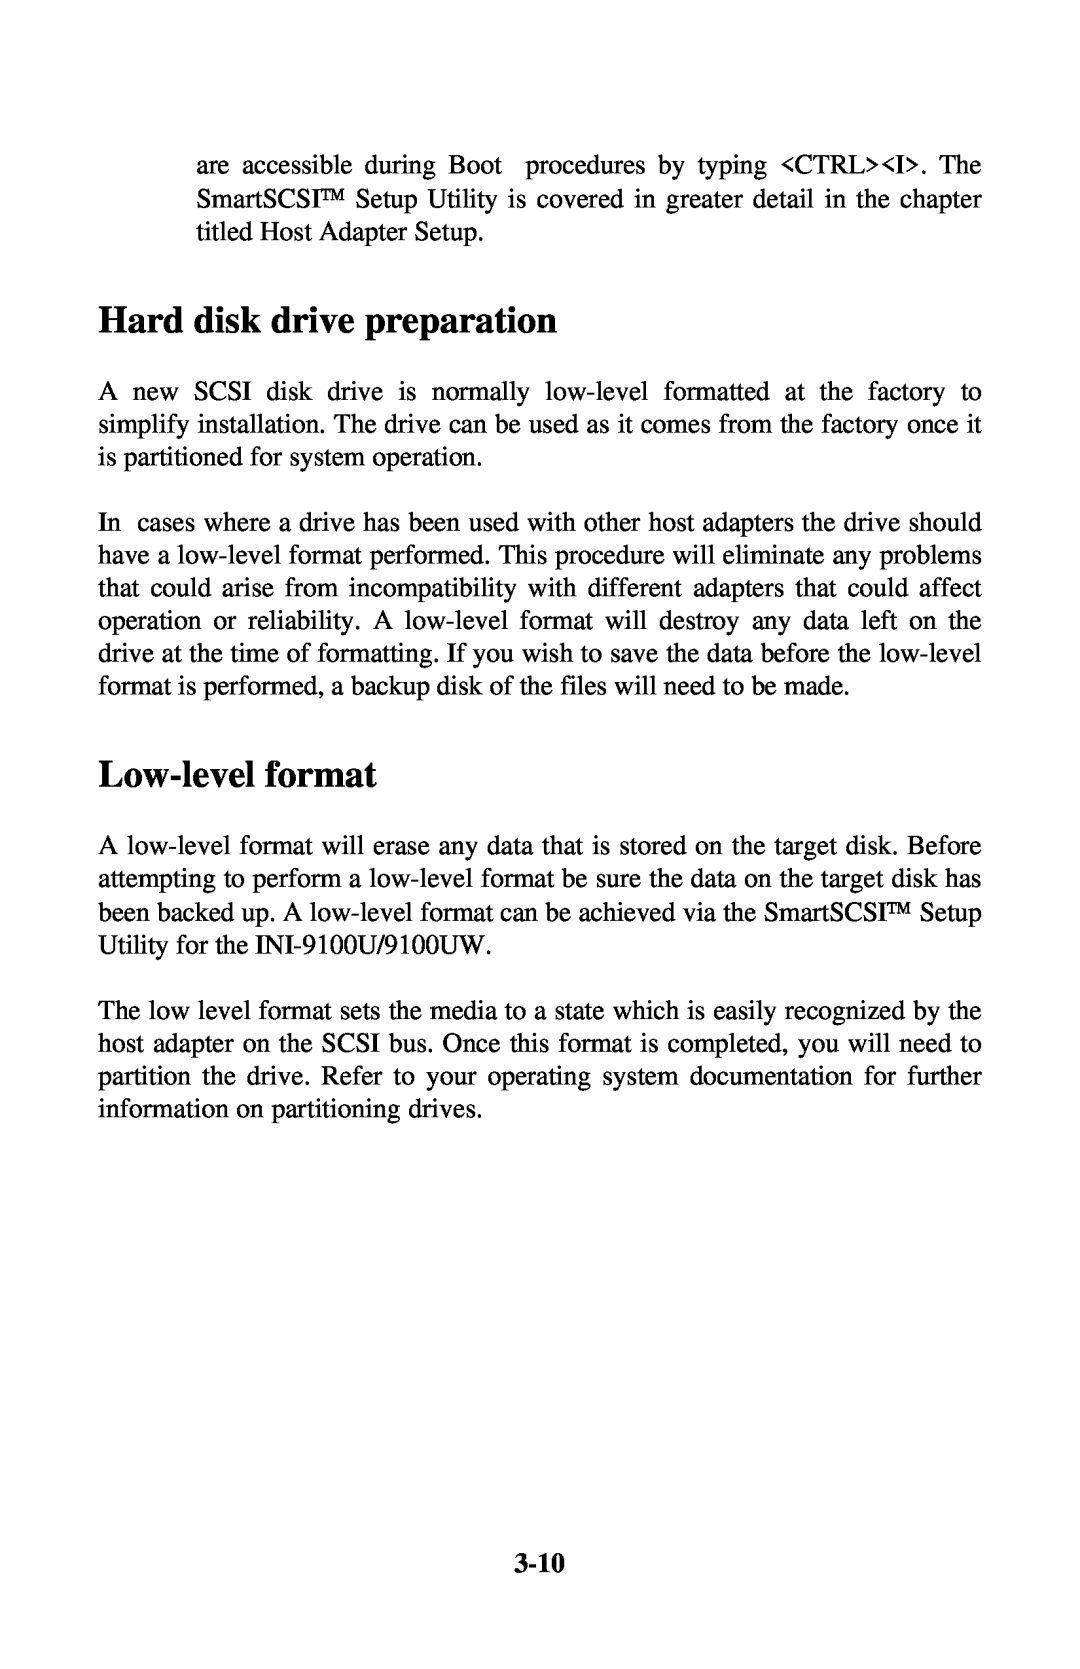 Initio INI-9100UW user manual Hard disk drive preparation, Low-level format, 3-10 